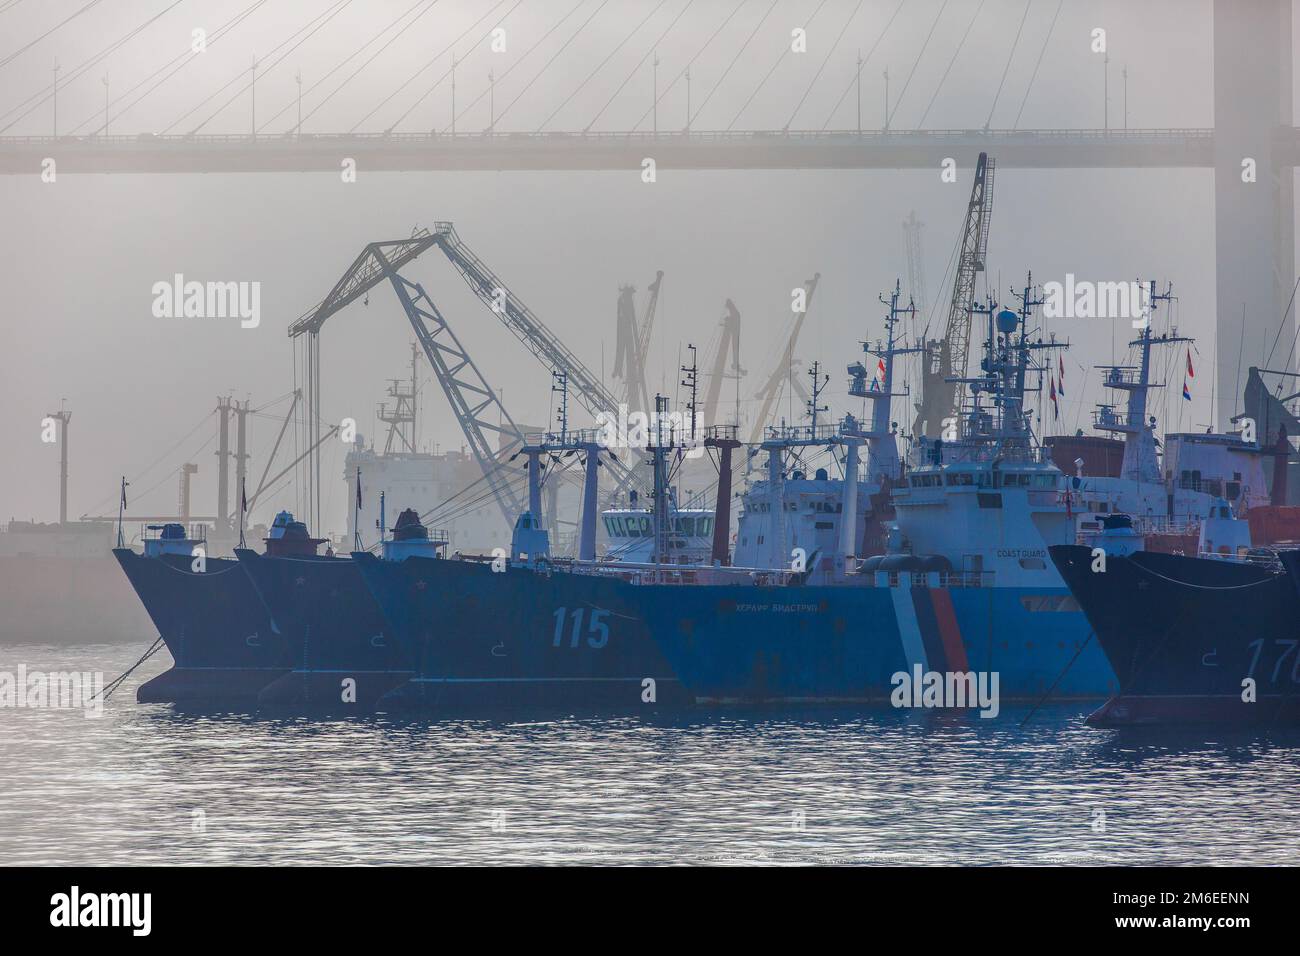 Vladivostok seaport. Various merchant ships stand on the roadstead in the Golden Horn Bay in Vladivostok during heavy fog Stock Photo